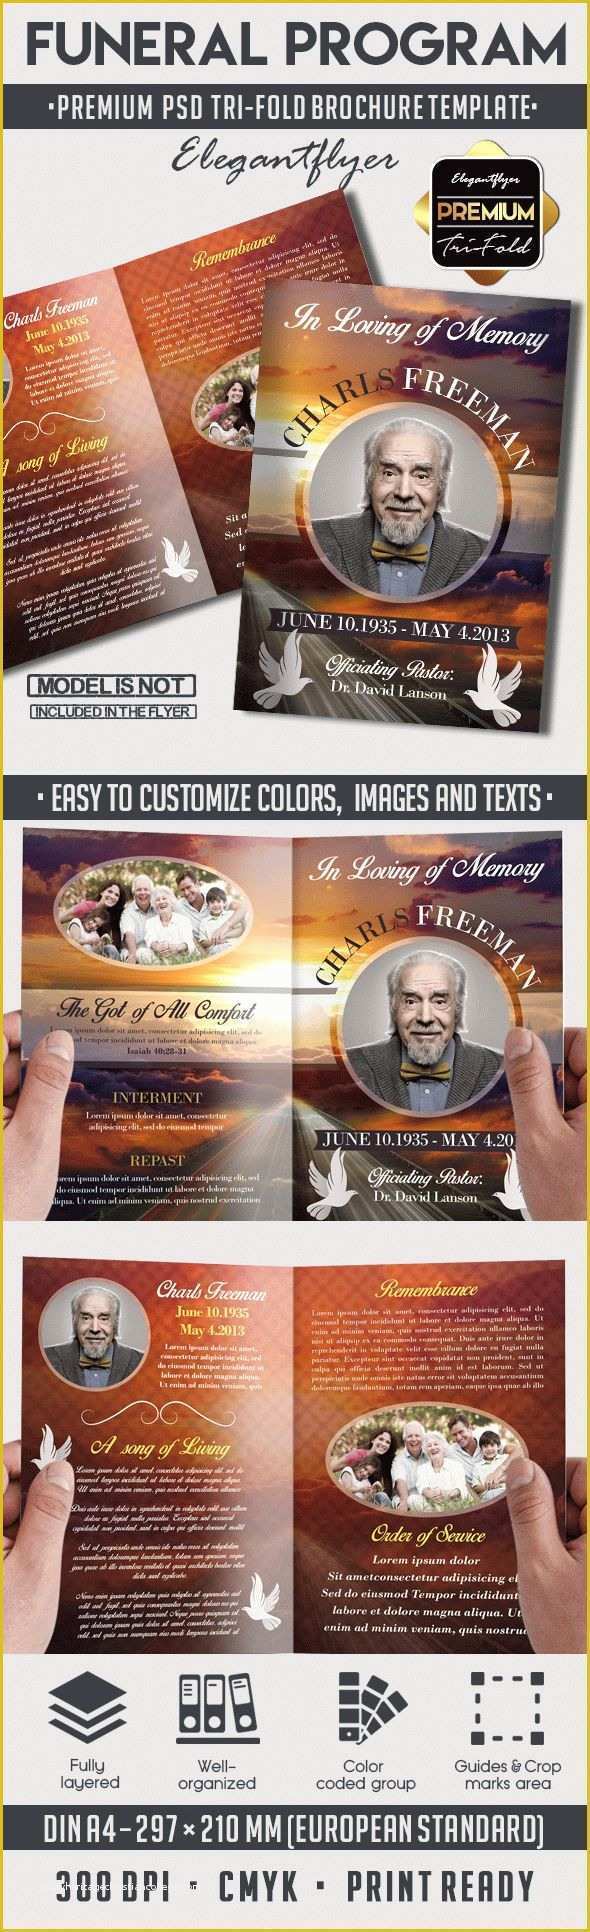 Free Funeral Flyer Template Psd Of Bi Fold Brochure for Funeral Program – by Elegantflyer